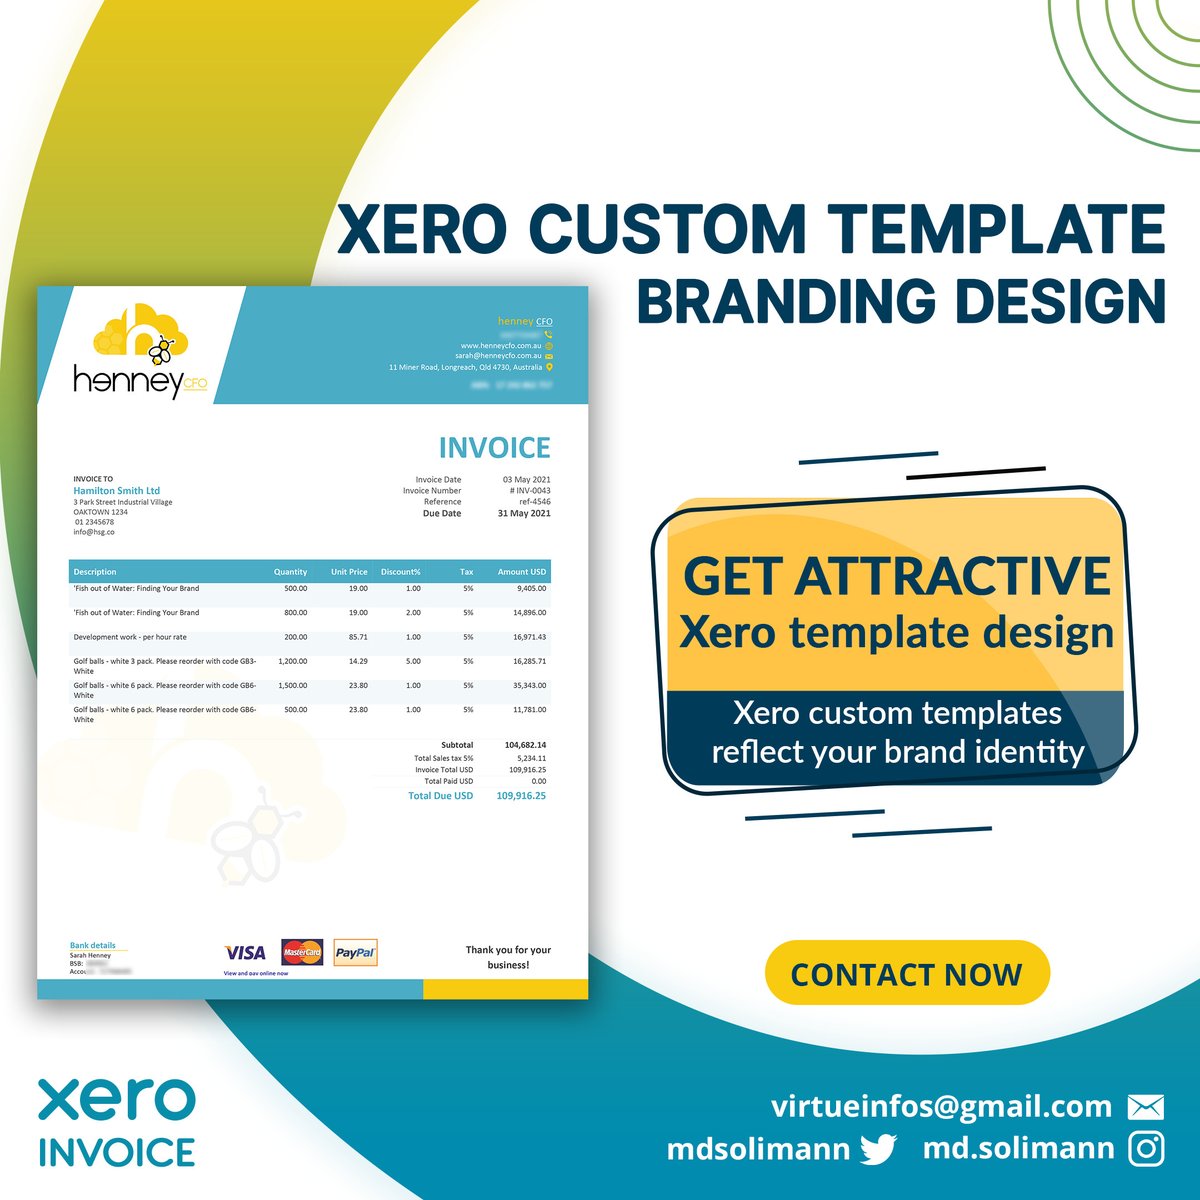 Xero Custom Invoice Template Branding

#Xero #Xerotemplate #Xerocertified #XeroAustralia #Xerocon #XeroCustomTemplate #XeroExpert #XeroBookkeeping #XeroAwards #Bookkeeping #Accountants #Bookkeeper #SmallBizTips #SmallBiz #SmallBusiness #SmallBusinessOwner #Biz #BusinessOwner